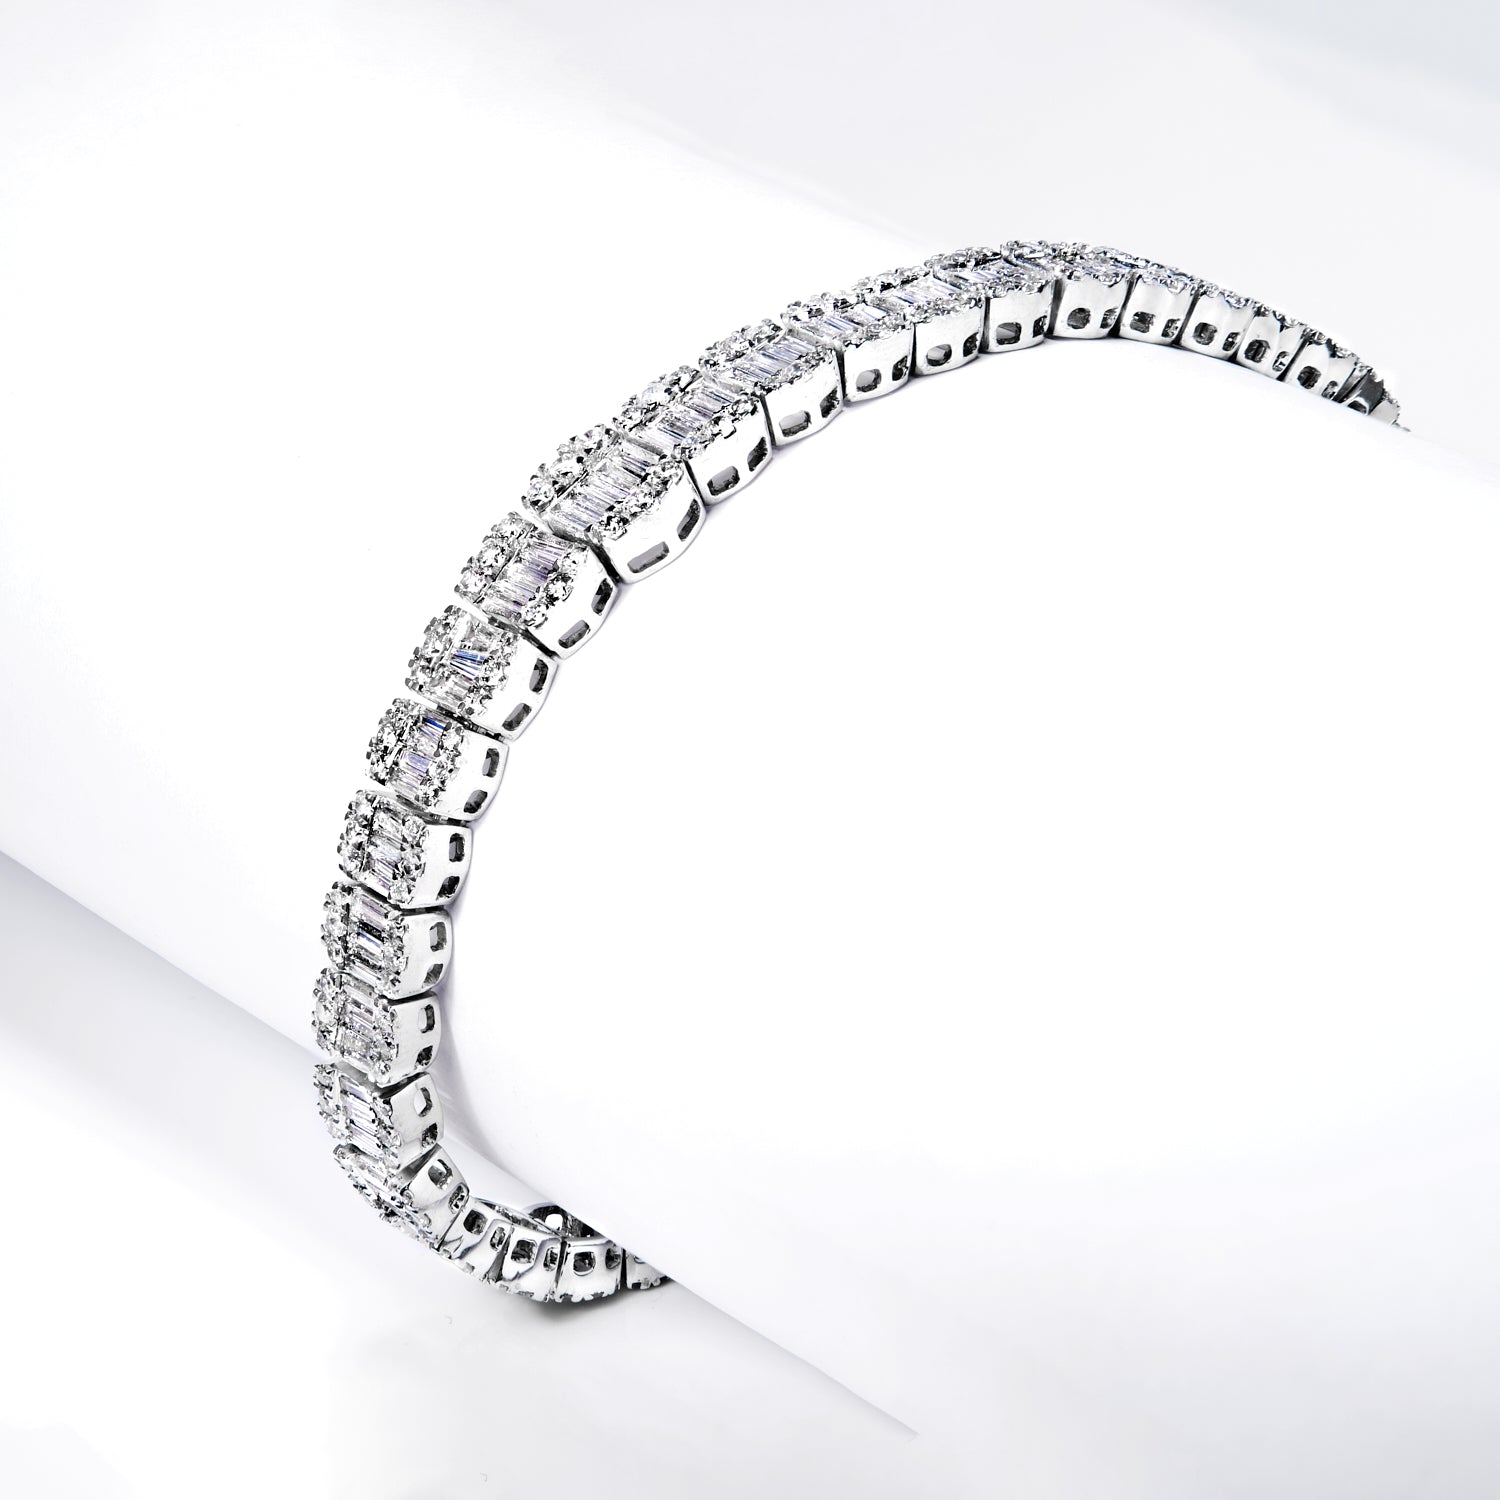 Hudson 9 Carat Combine Mix Shape Single Row Diamond Tennis Bracelet in